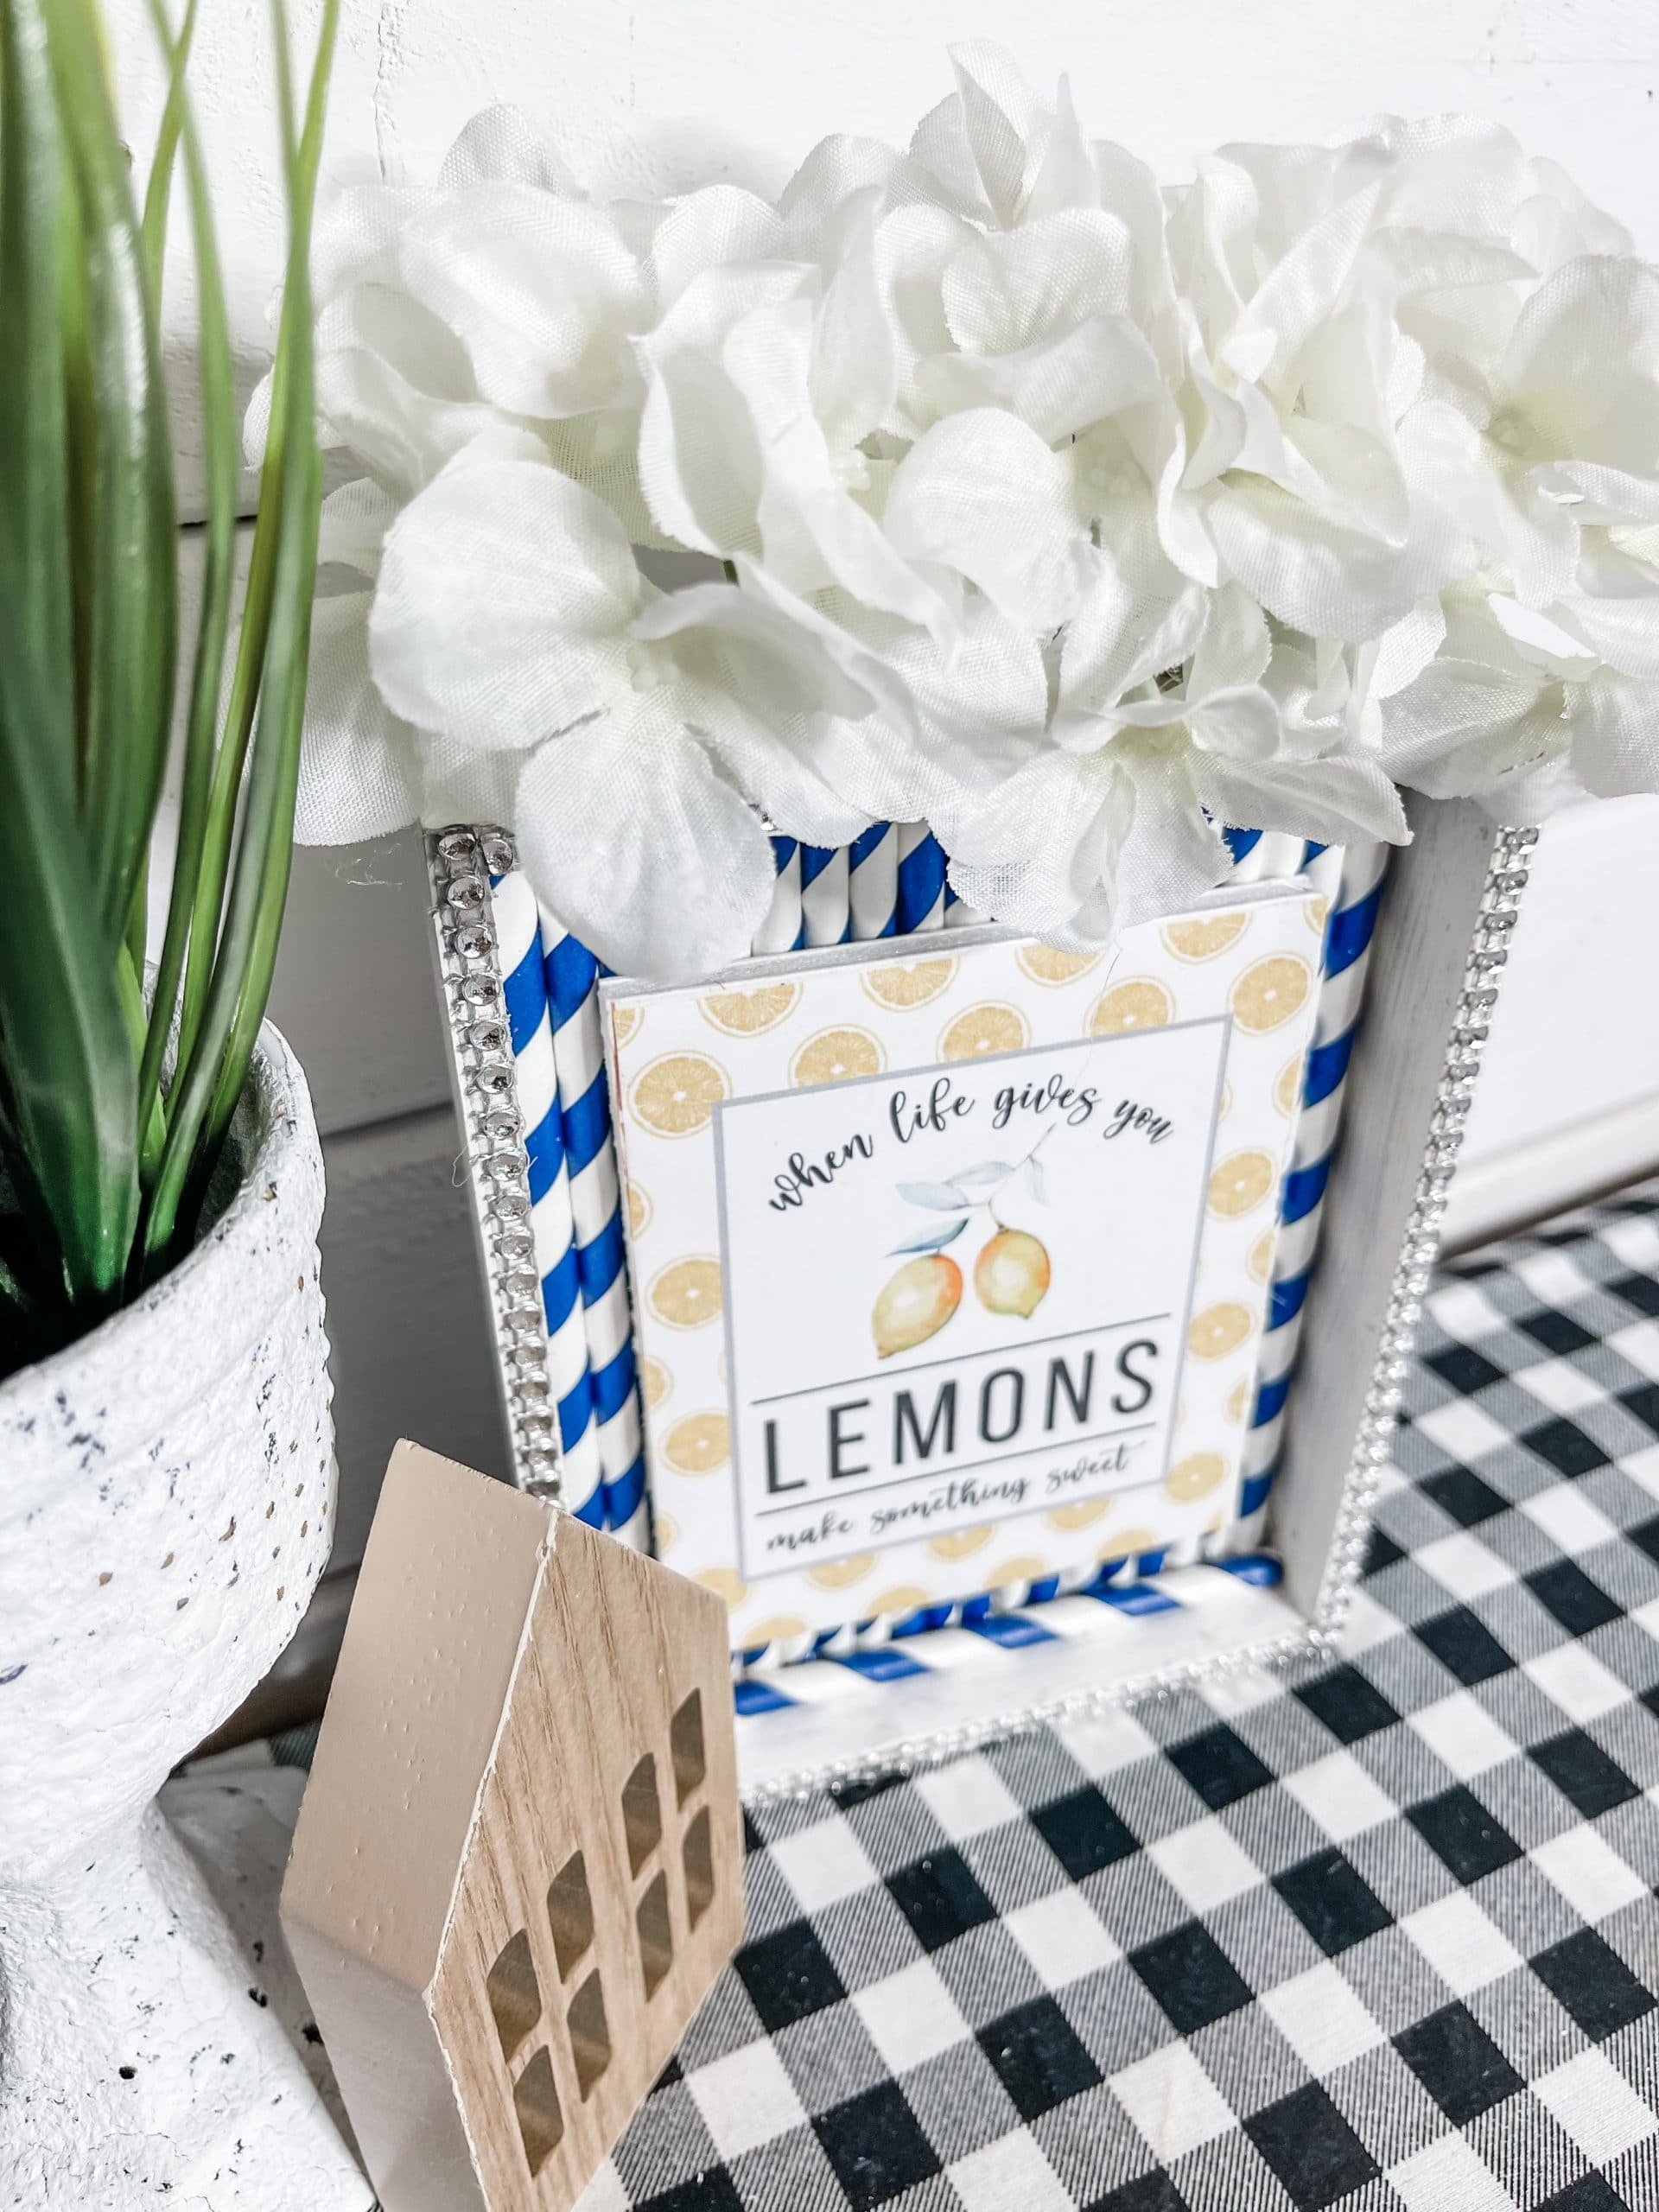 3 Lemon Printable DIY Decor Ideas for a Tiered Tray